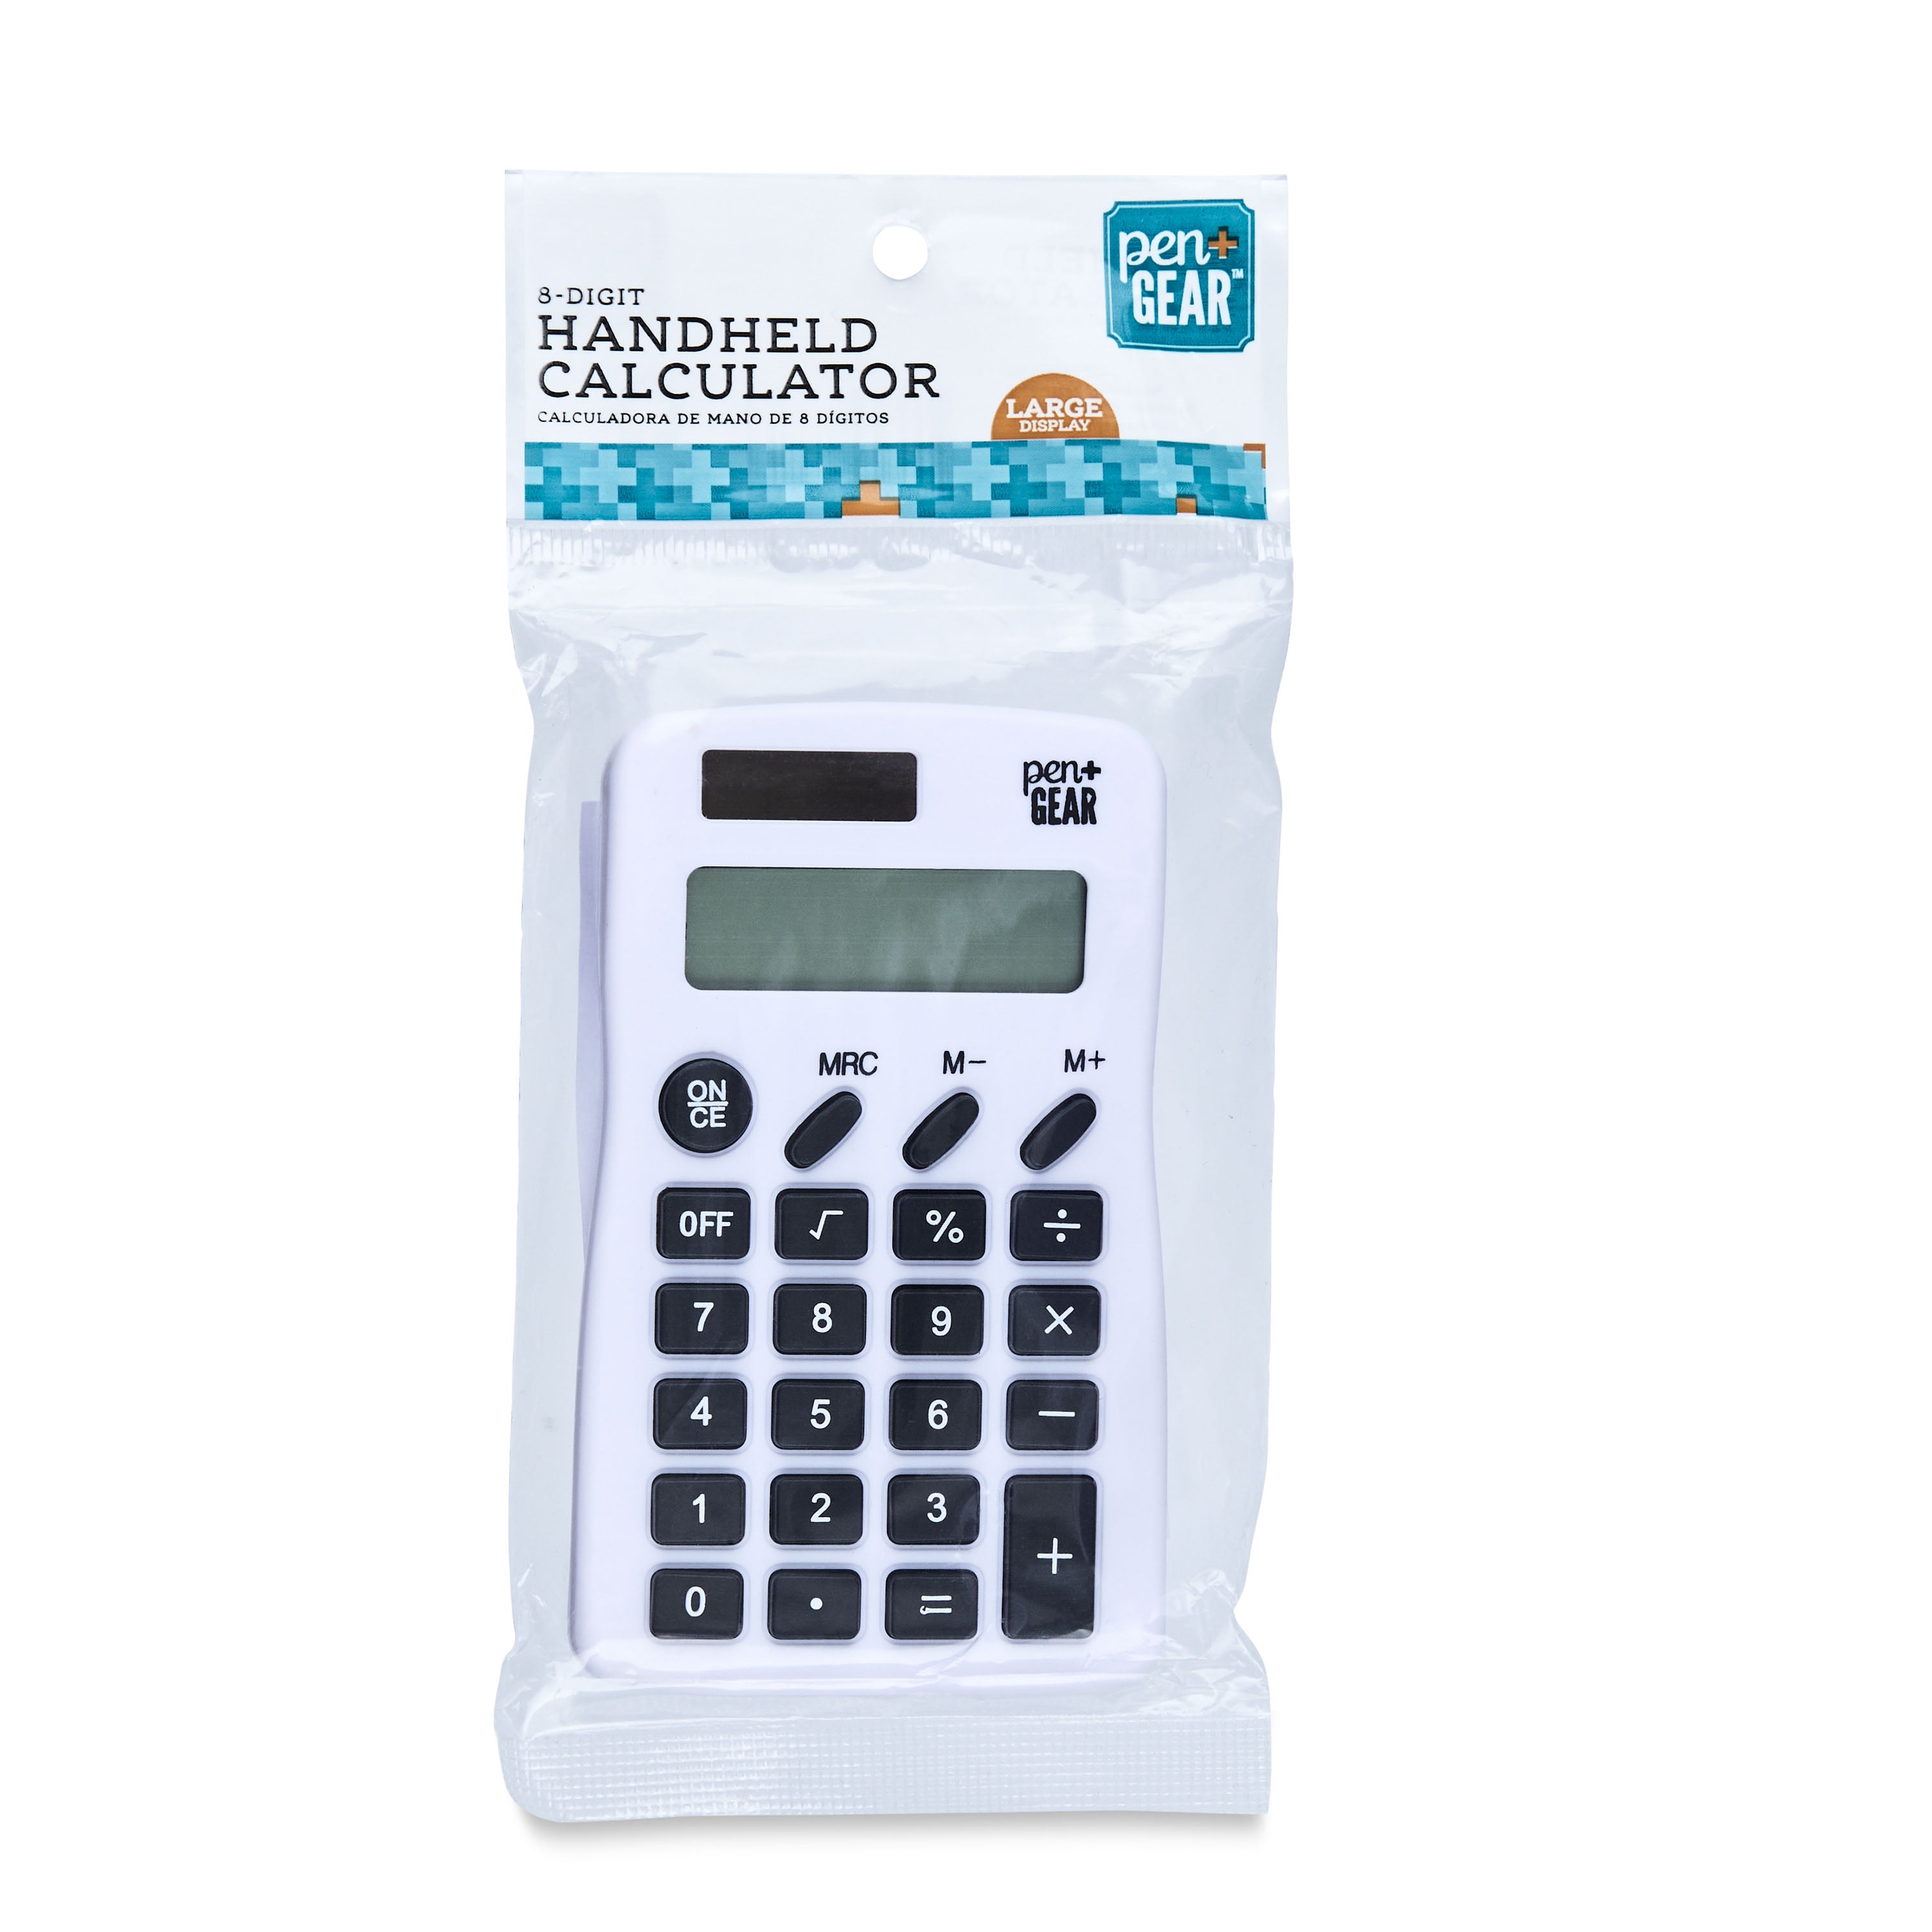 Pen + Gear 8-Digit Handheld Calculator, White, Office